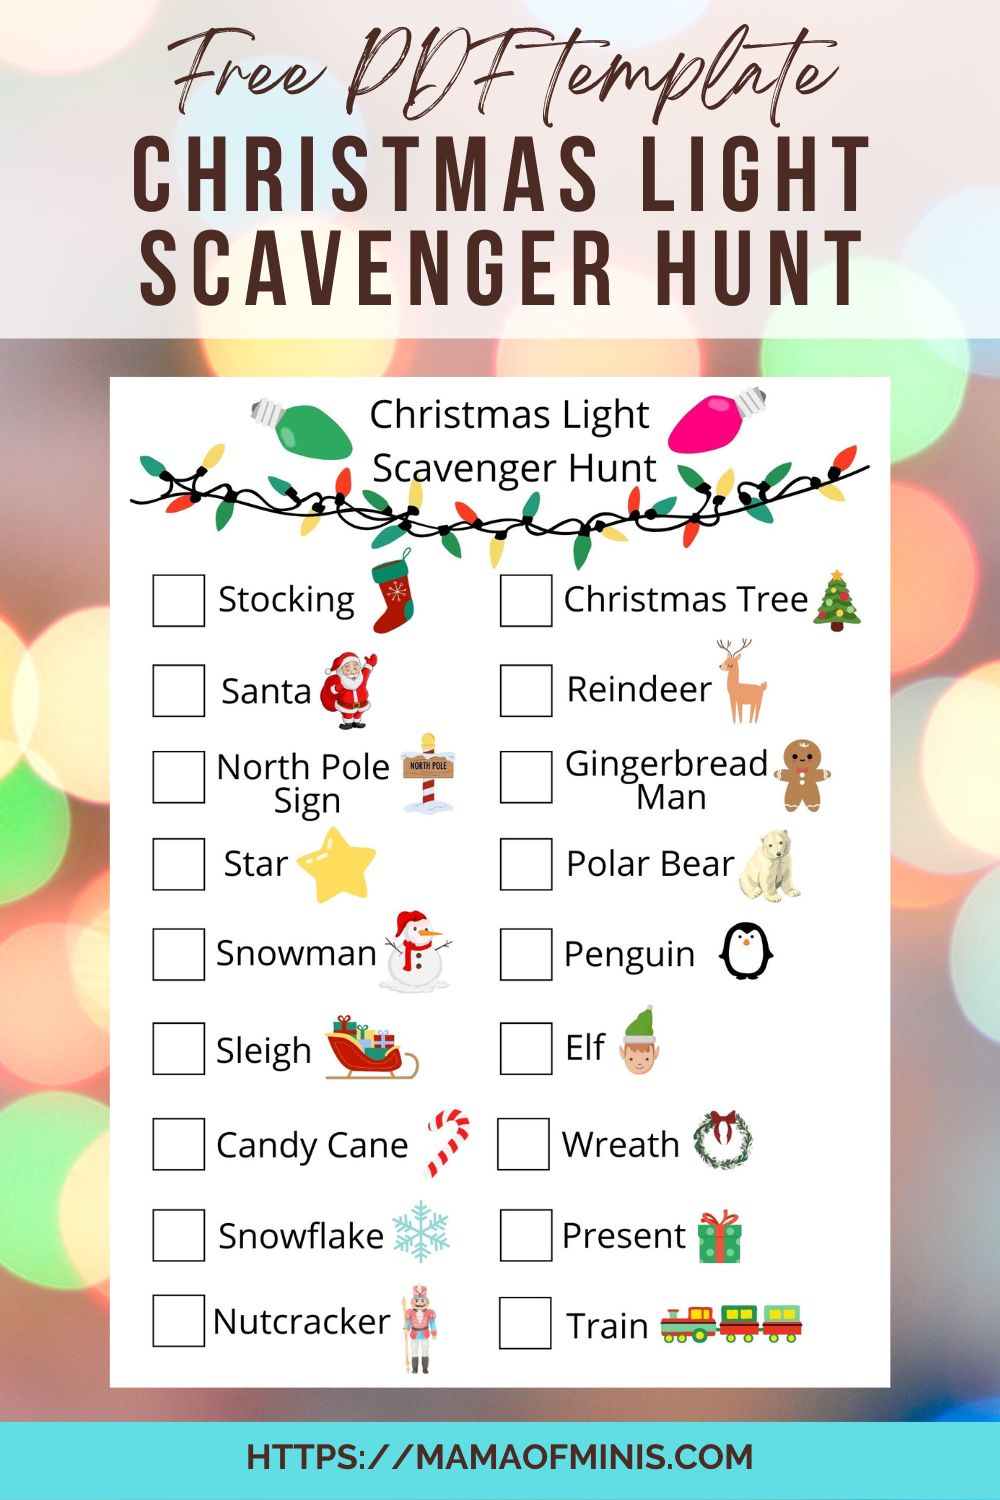 Free PDF Template Christmas Light Scavenger Hunt